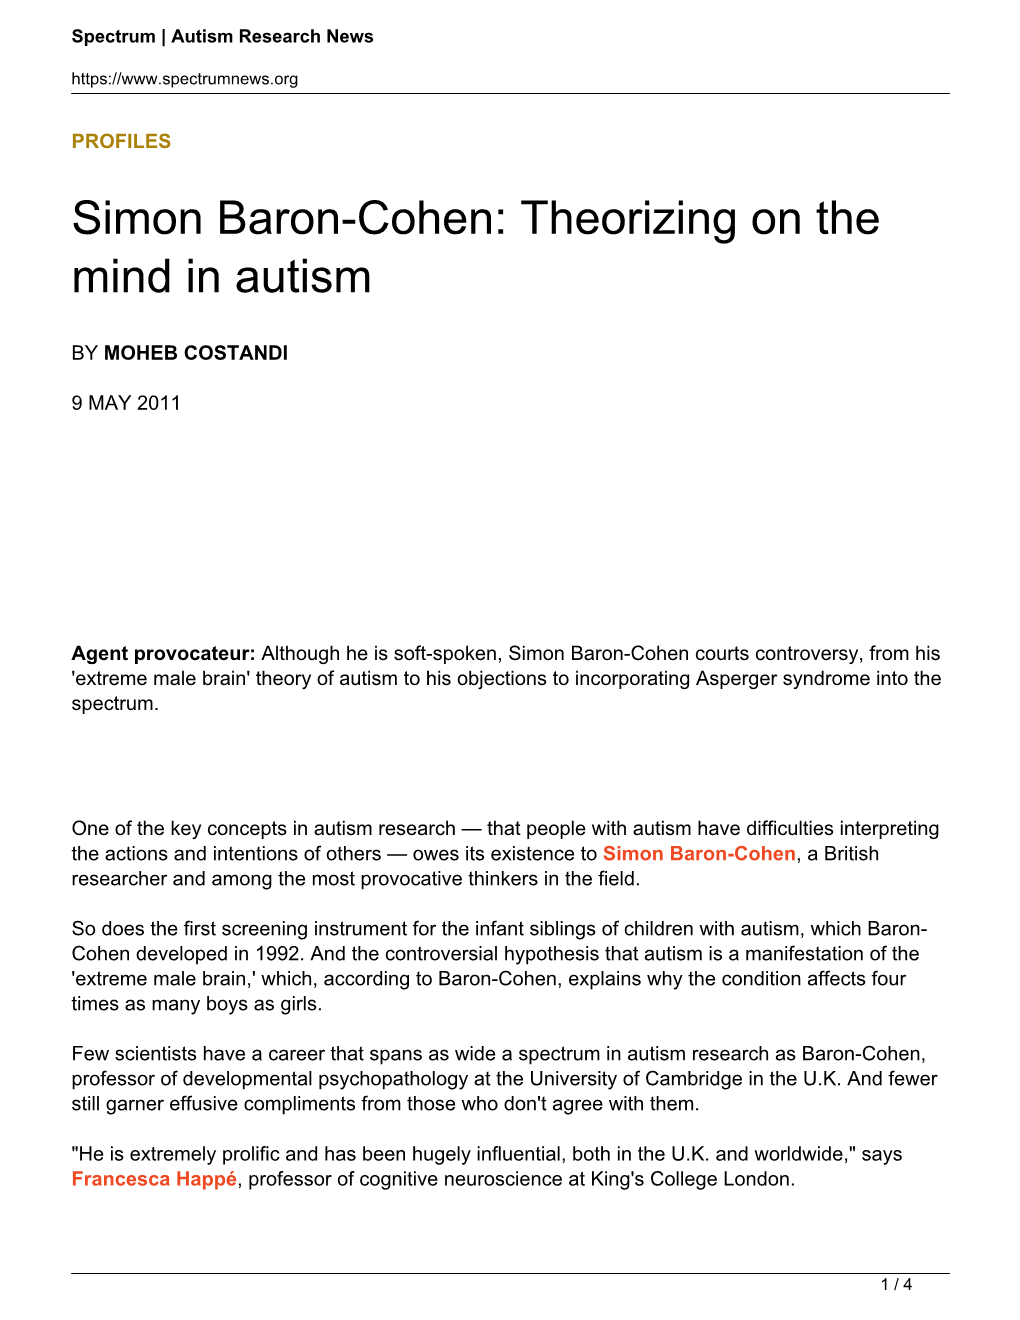 Simon Baron-Cohen: Theorizing on the Mind in Autism